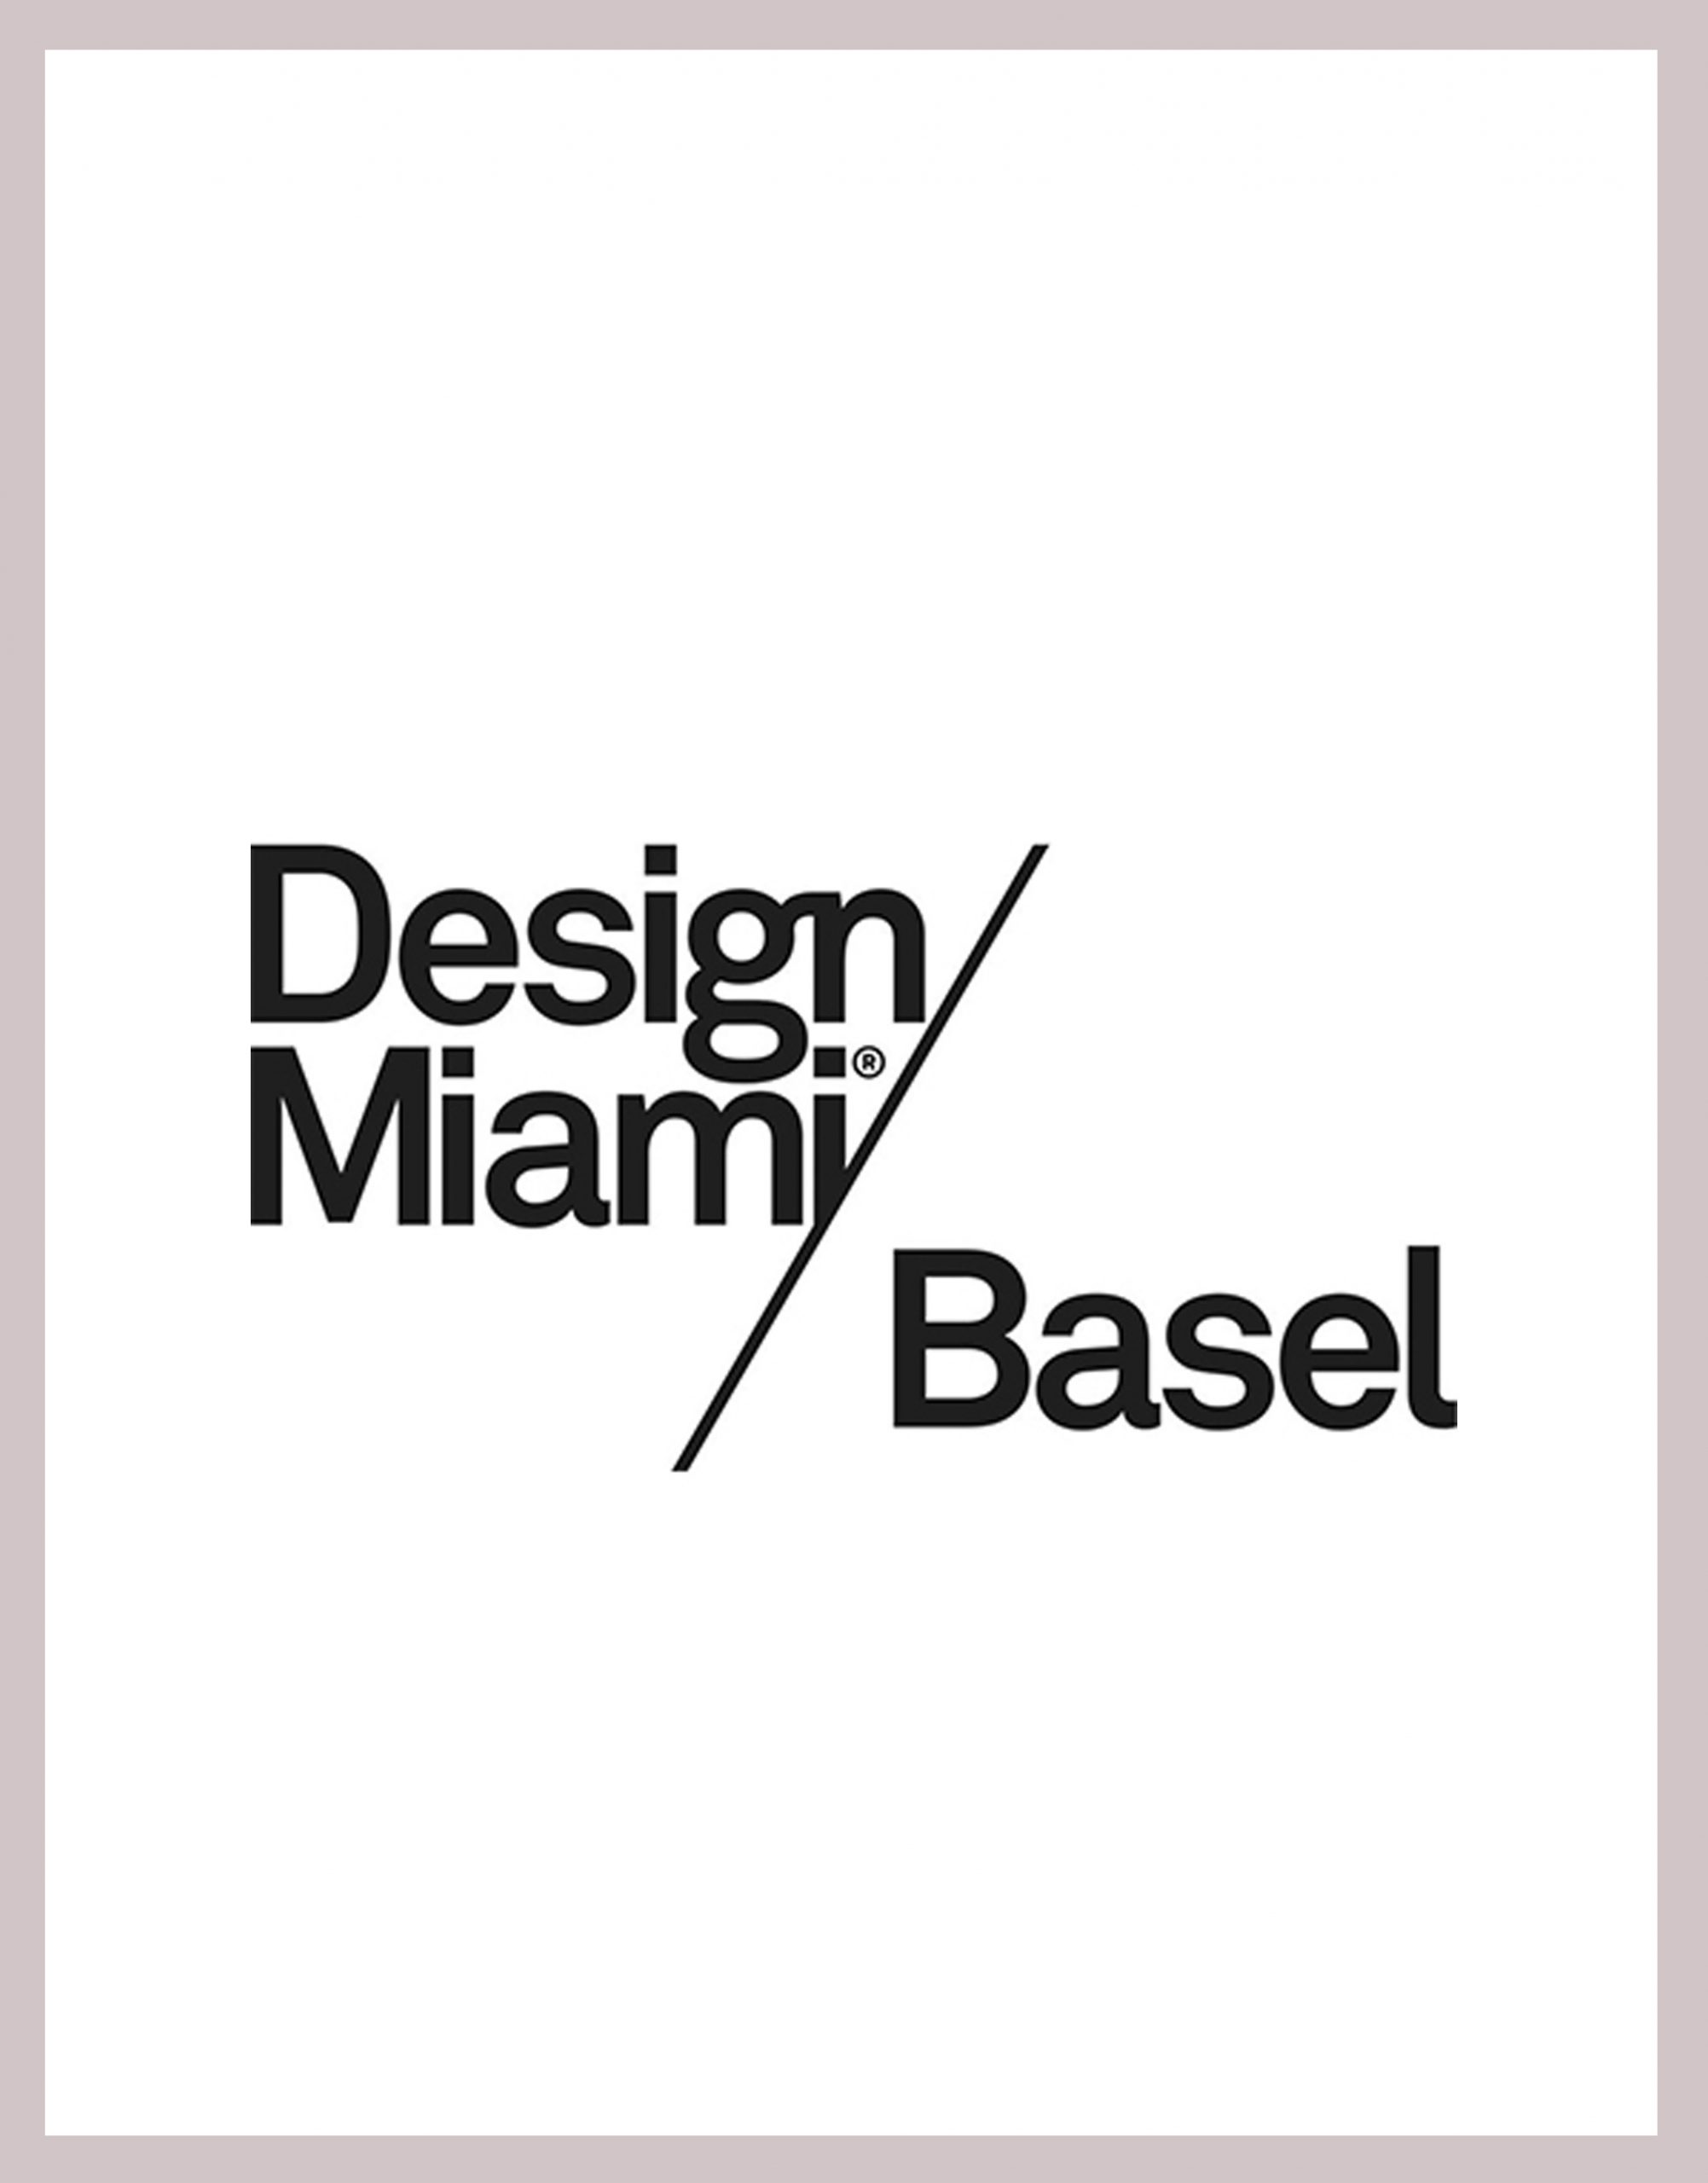 Studio Wieki Somers - Design Miami / Basel 2016